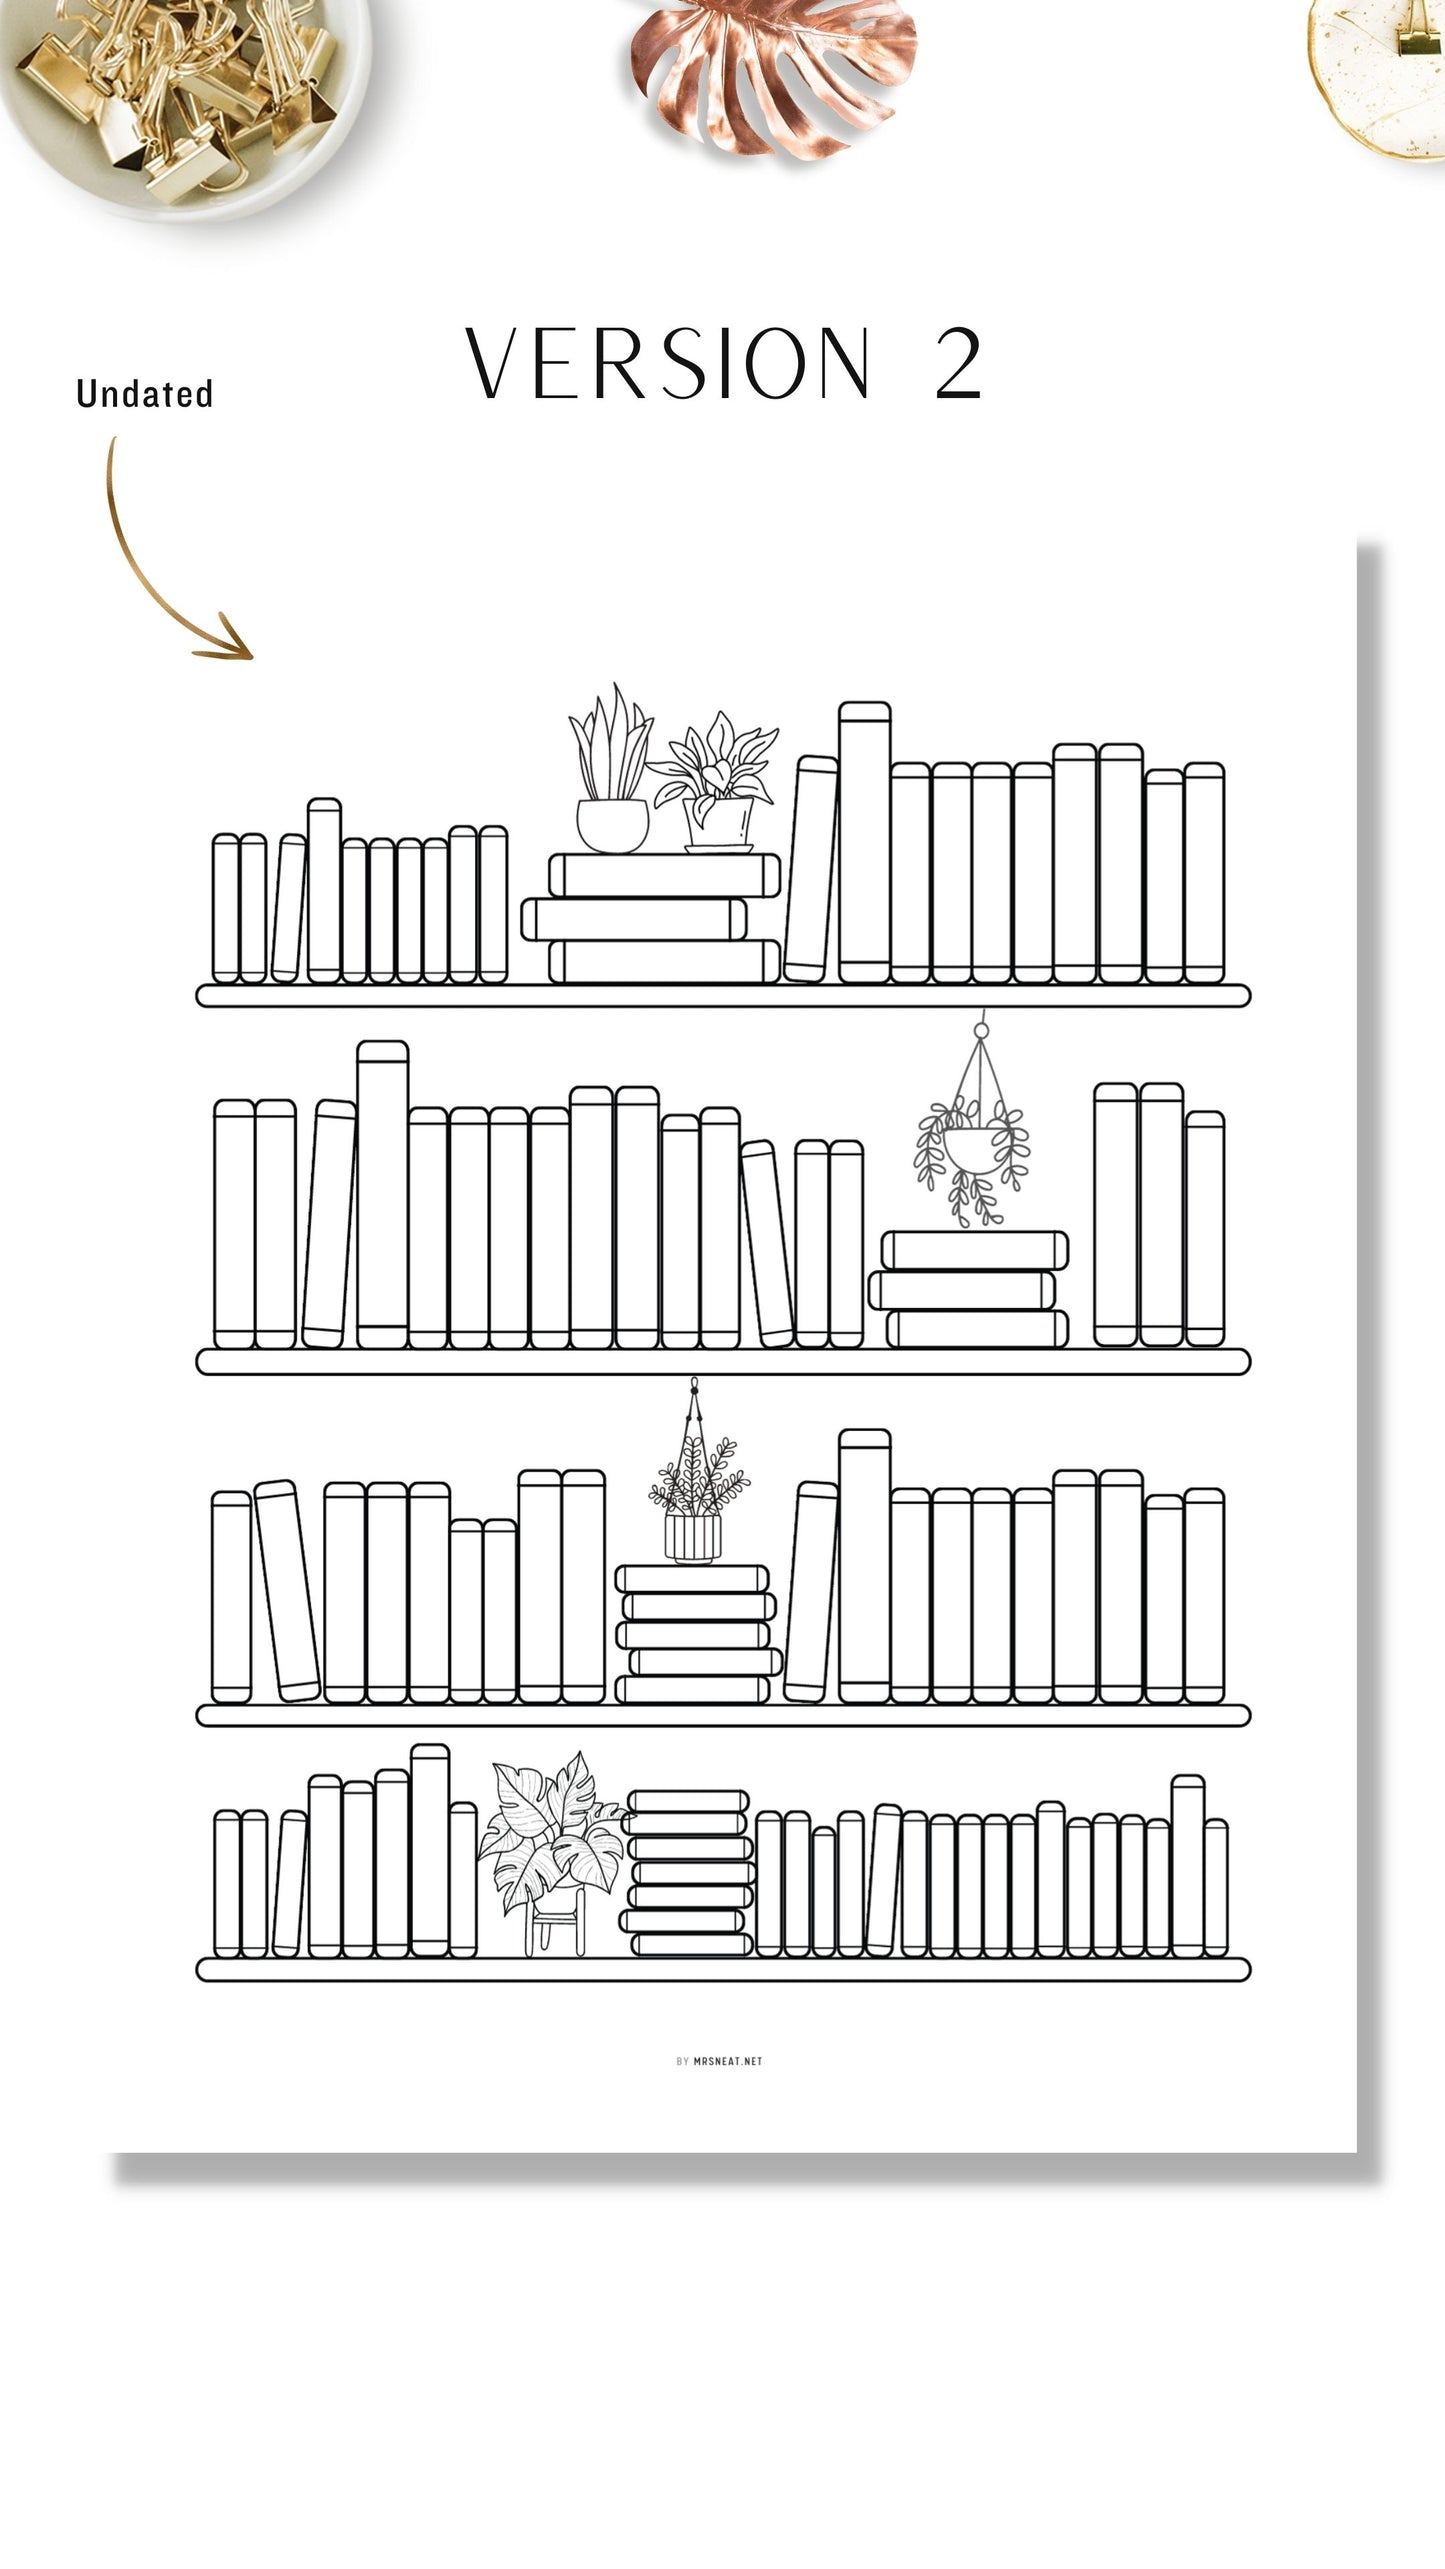 Undated Bookshelf Reading Tracker Printable - 100 Books